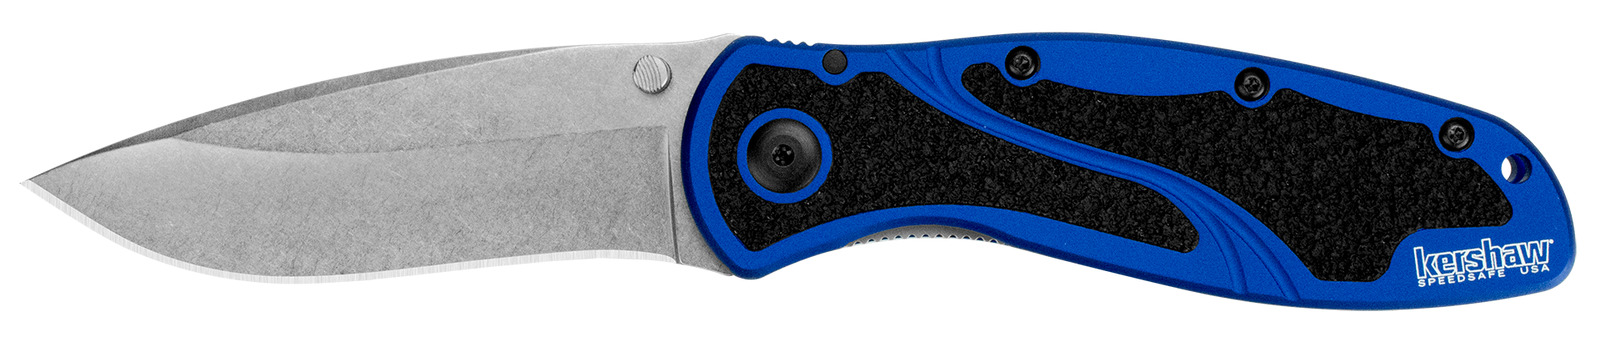 Kershaw Knives Blur Liner Lock Navy Blue Anodized Aluminum 14C28N Steel 1670NBSW